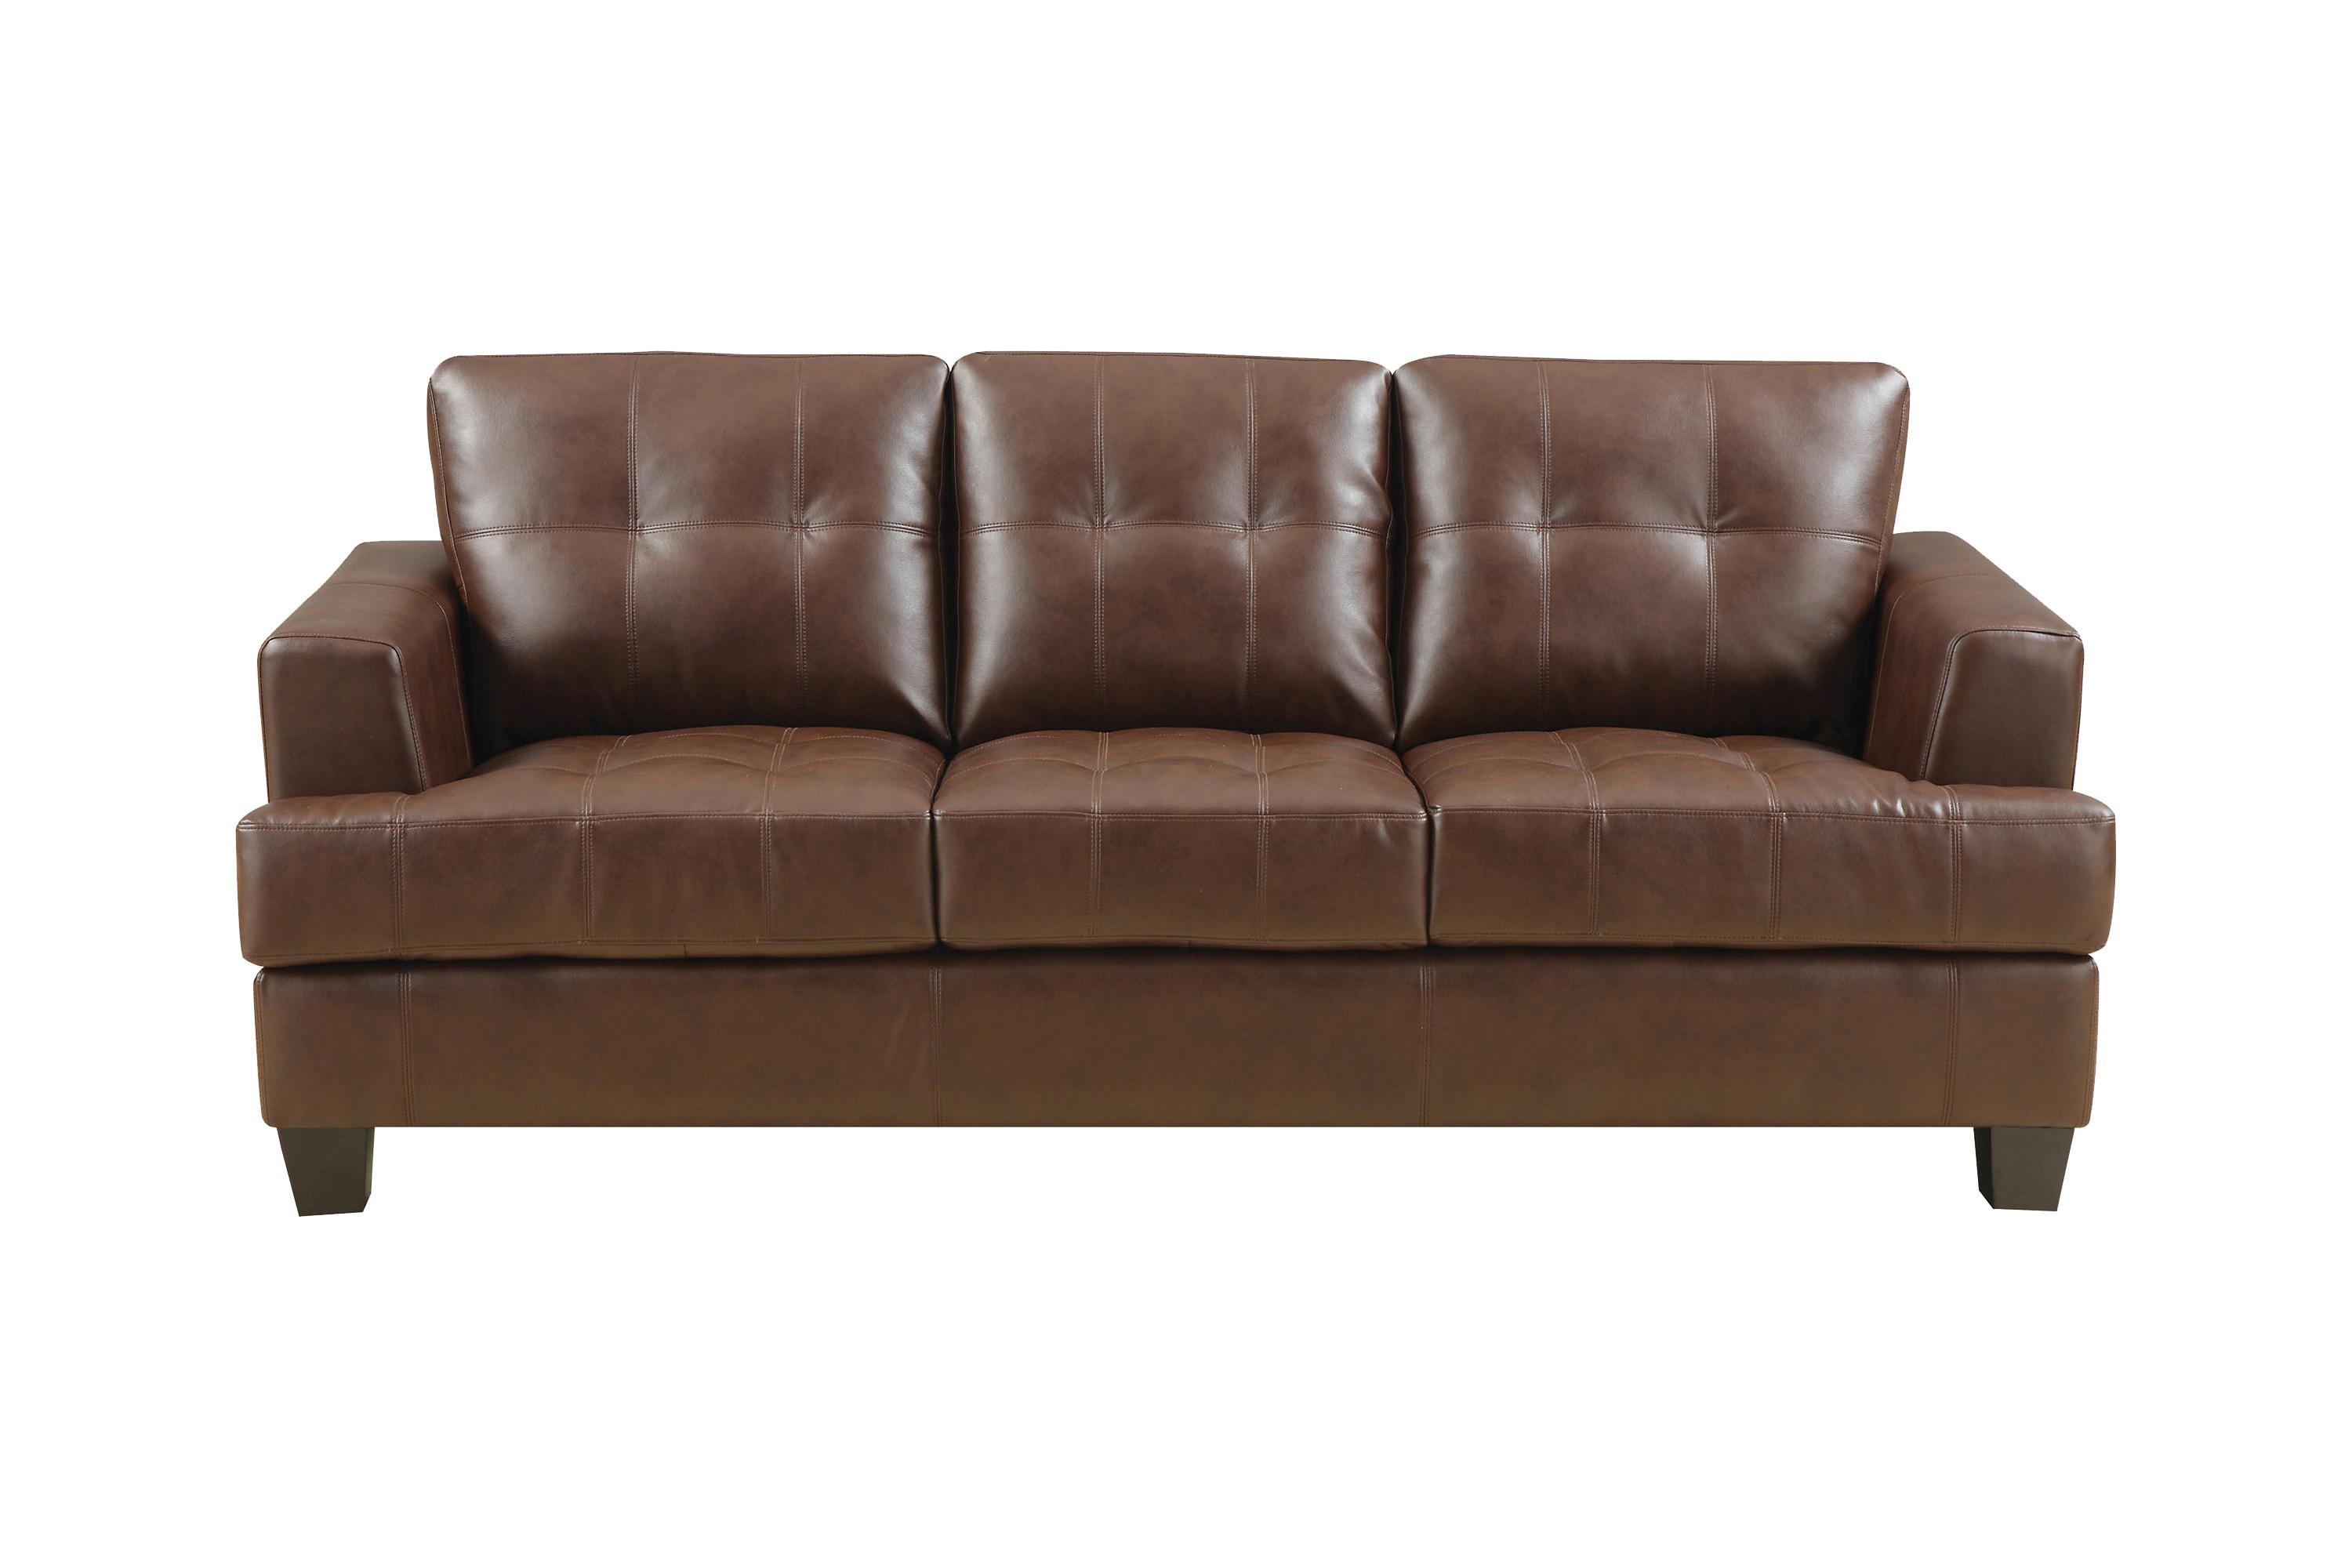 Transitional Sofa 504071 Samuel 504071 in Dark Brown Leatherette